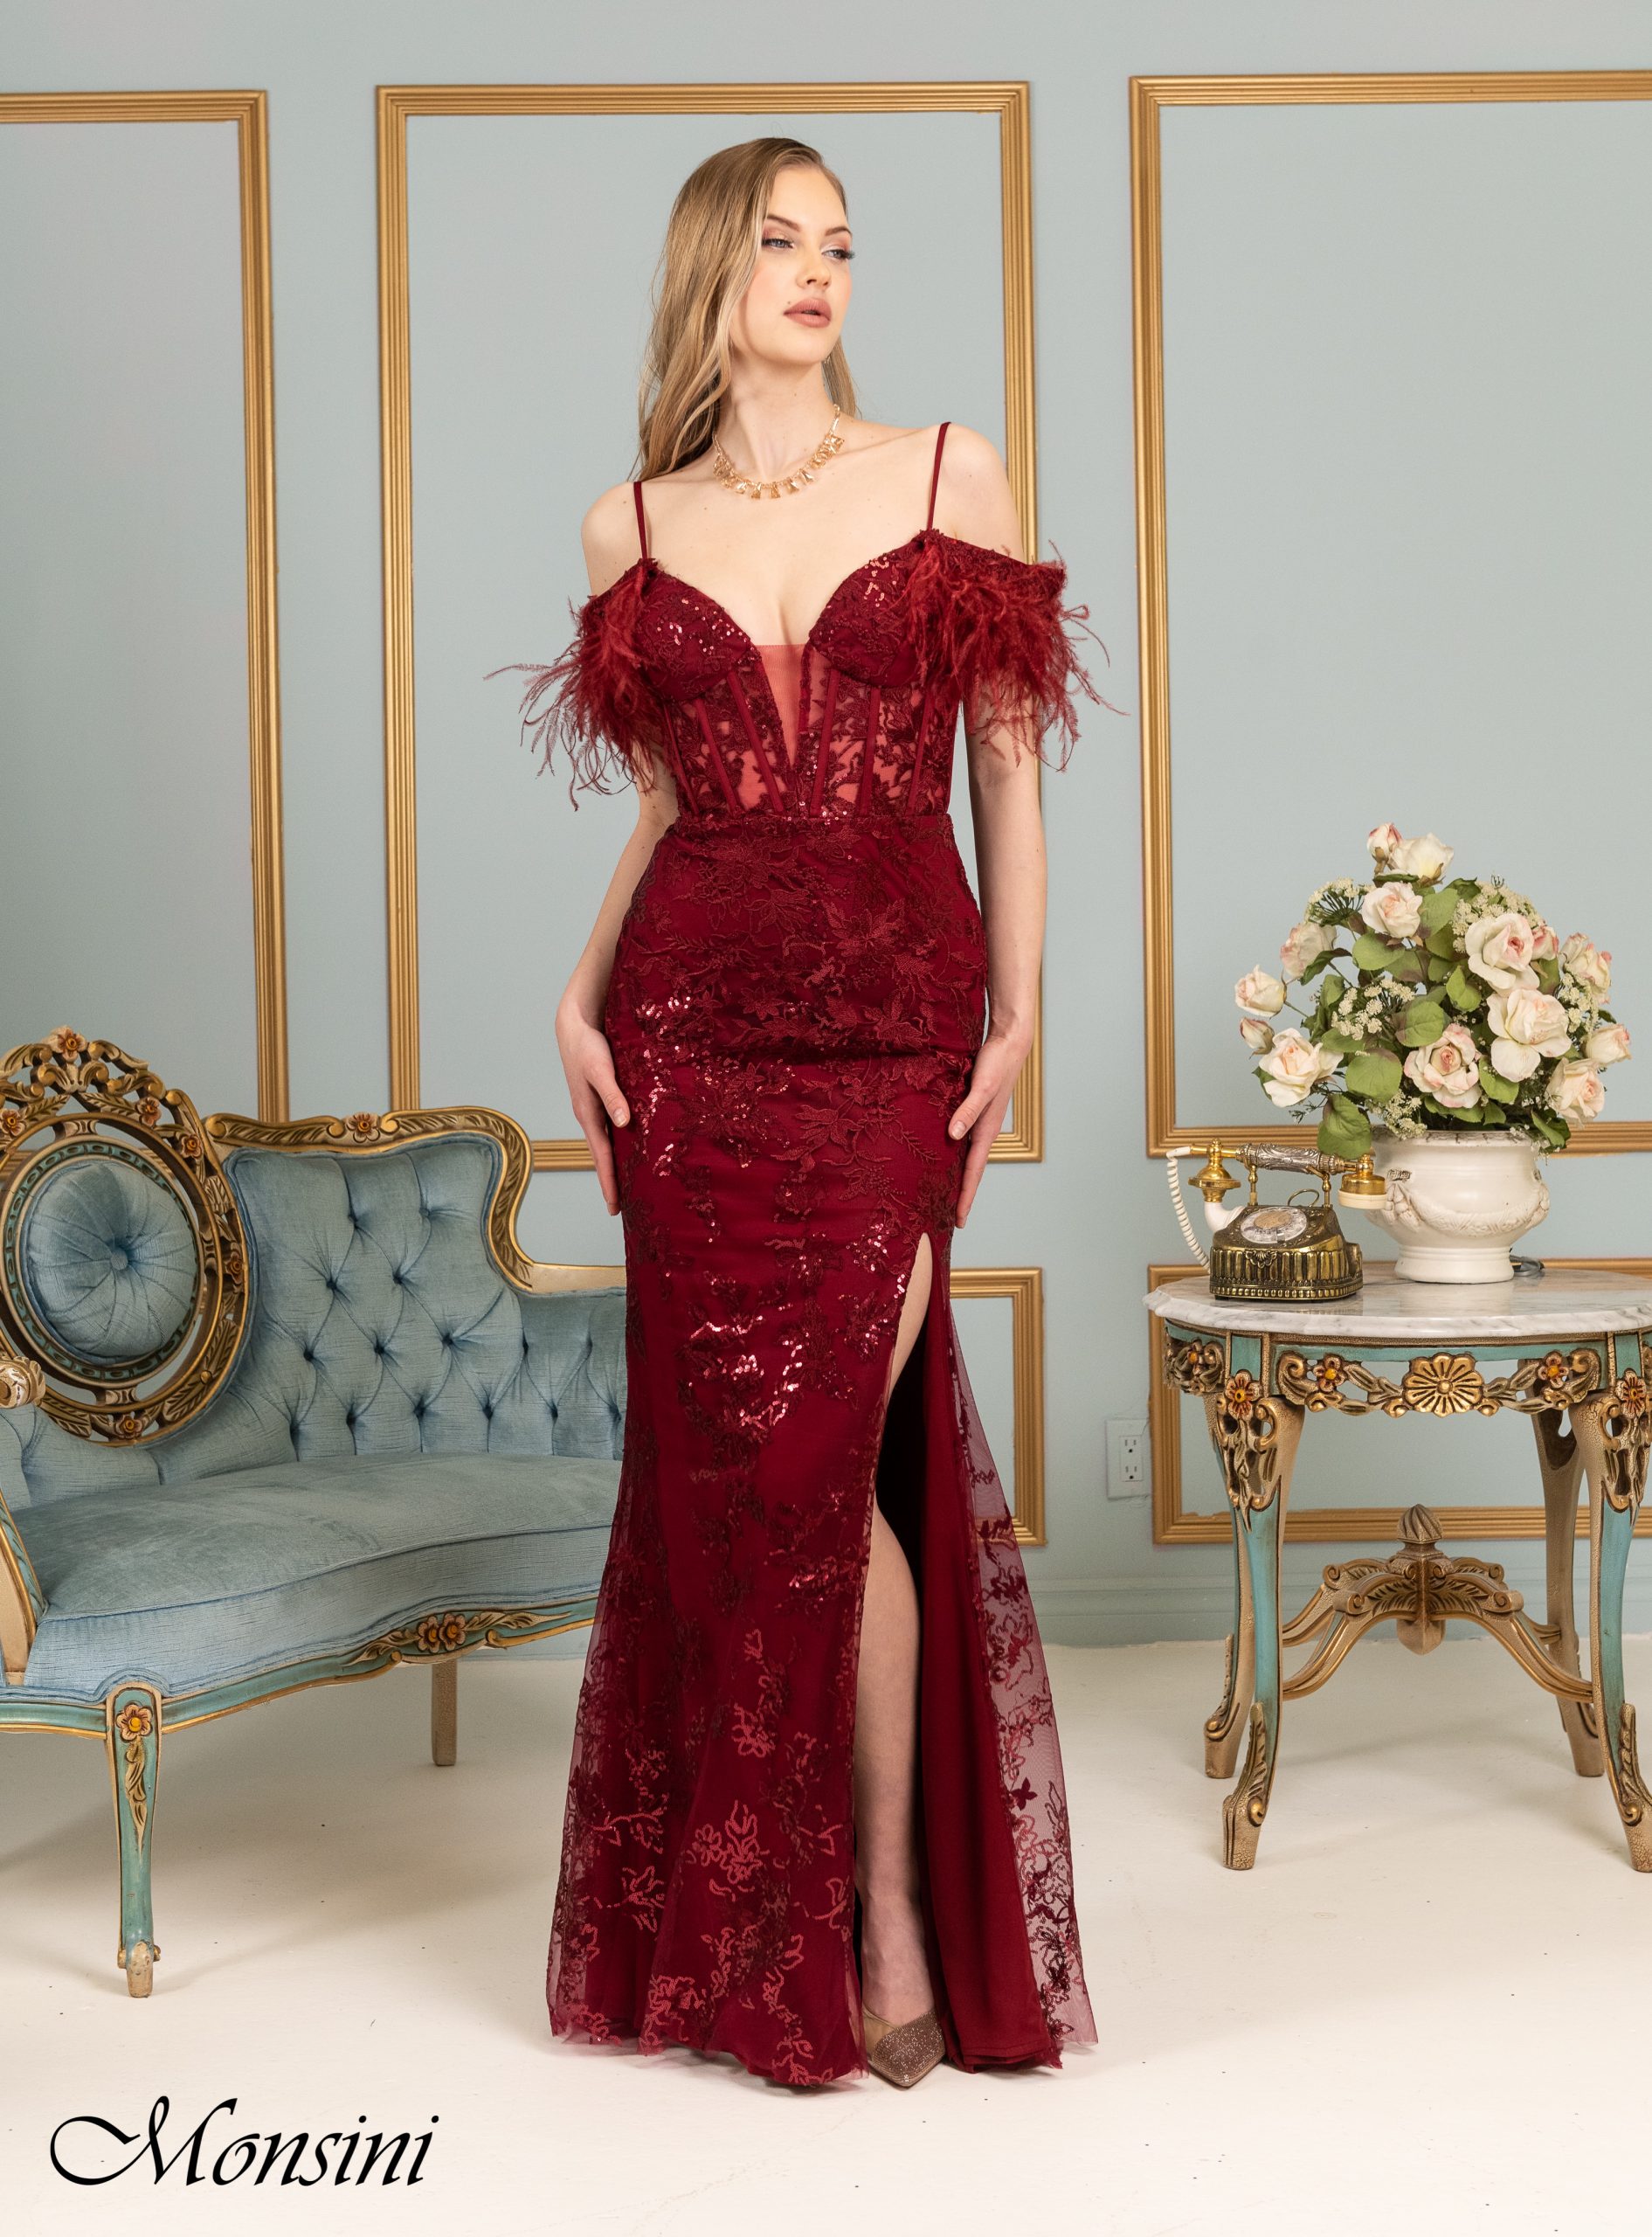 31928 - Monsini Prom Dresses available at Lisa's Bridal